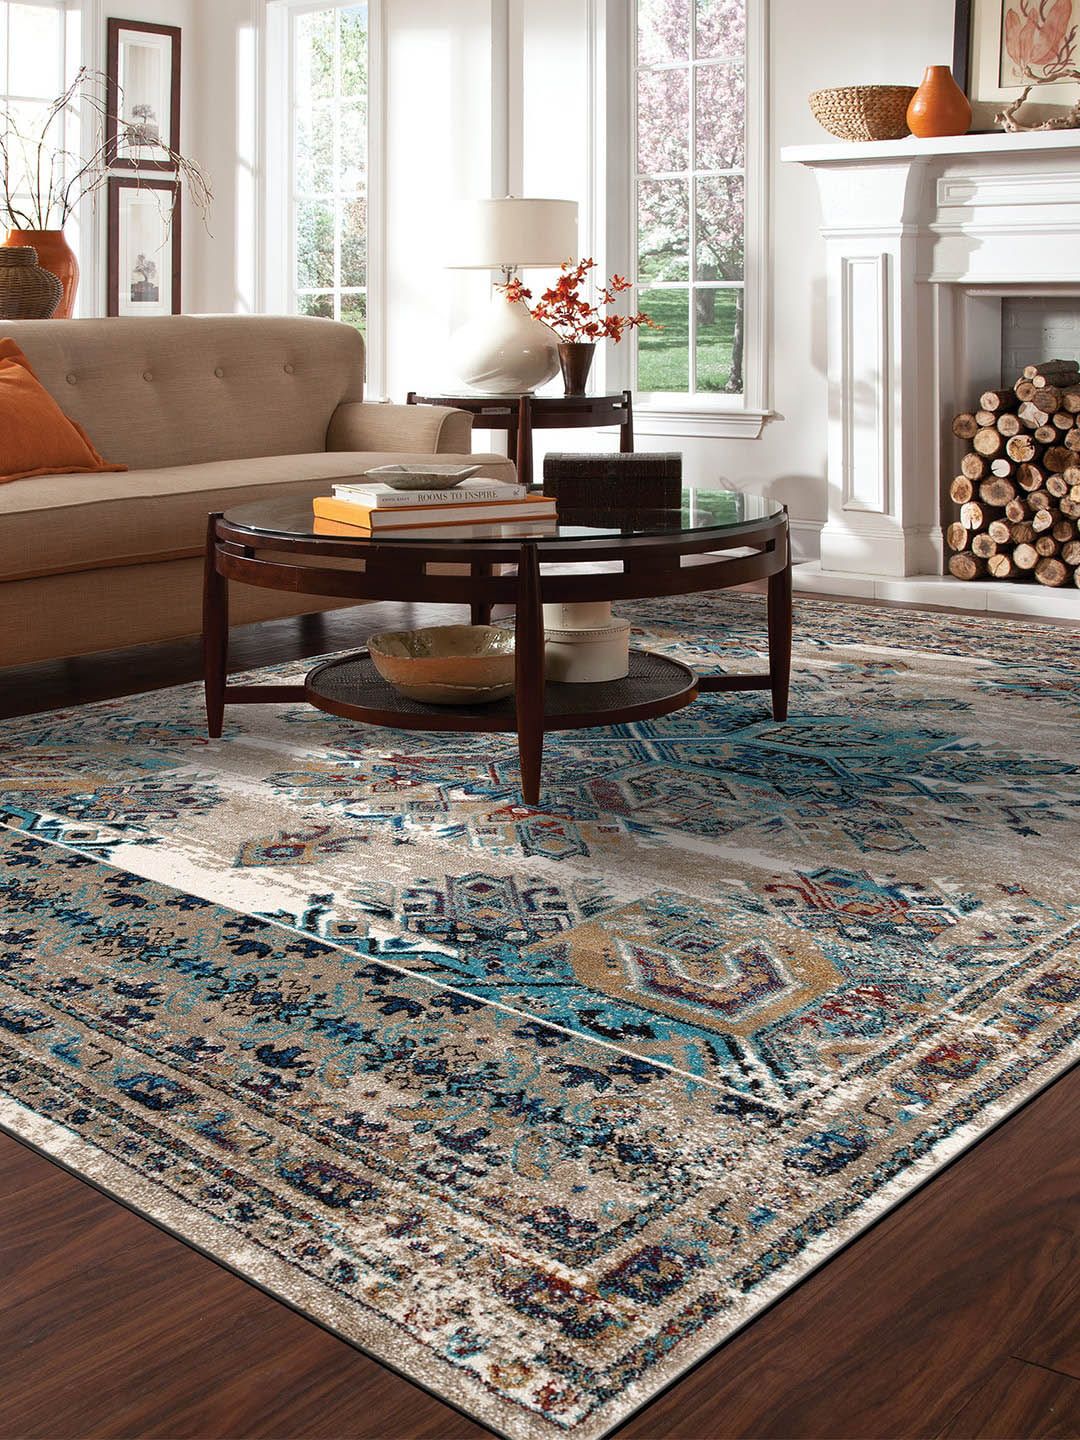 DDecor Turquoise Blue Ethnic Motifs Large Carpet Price in India